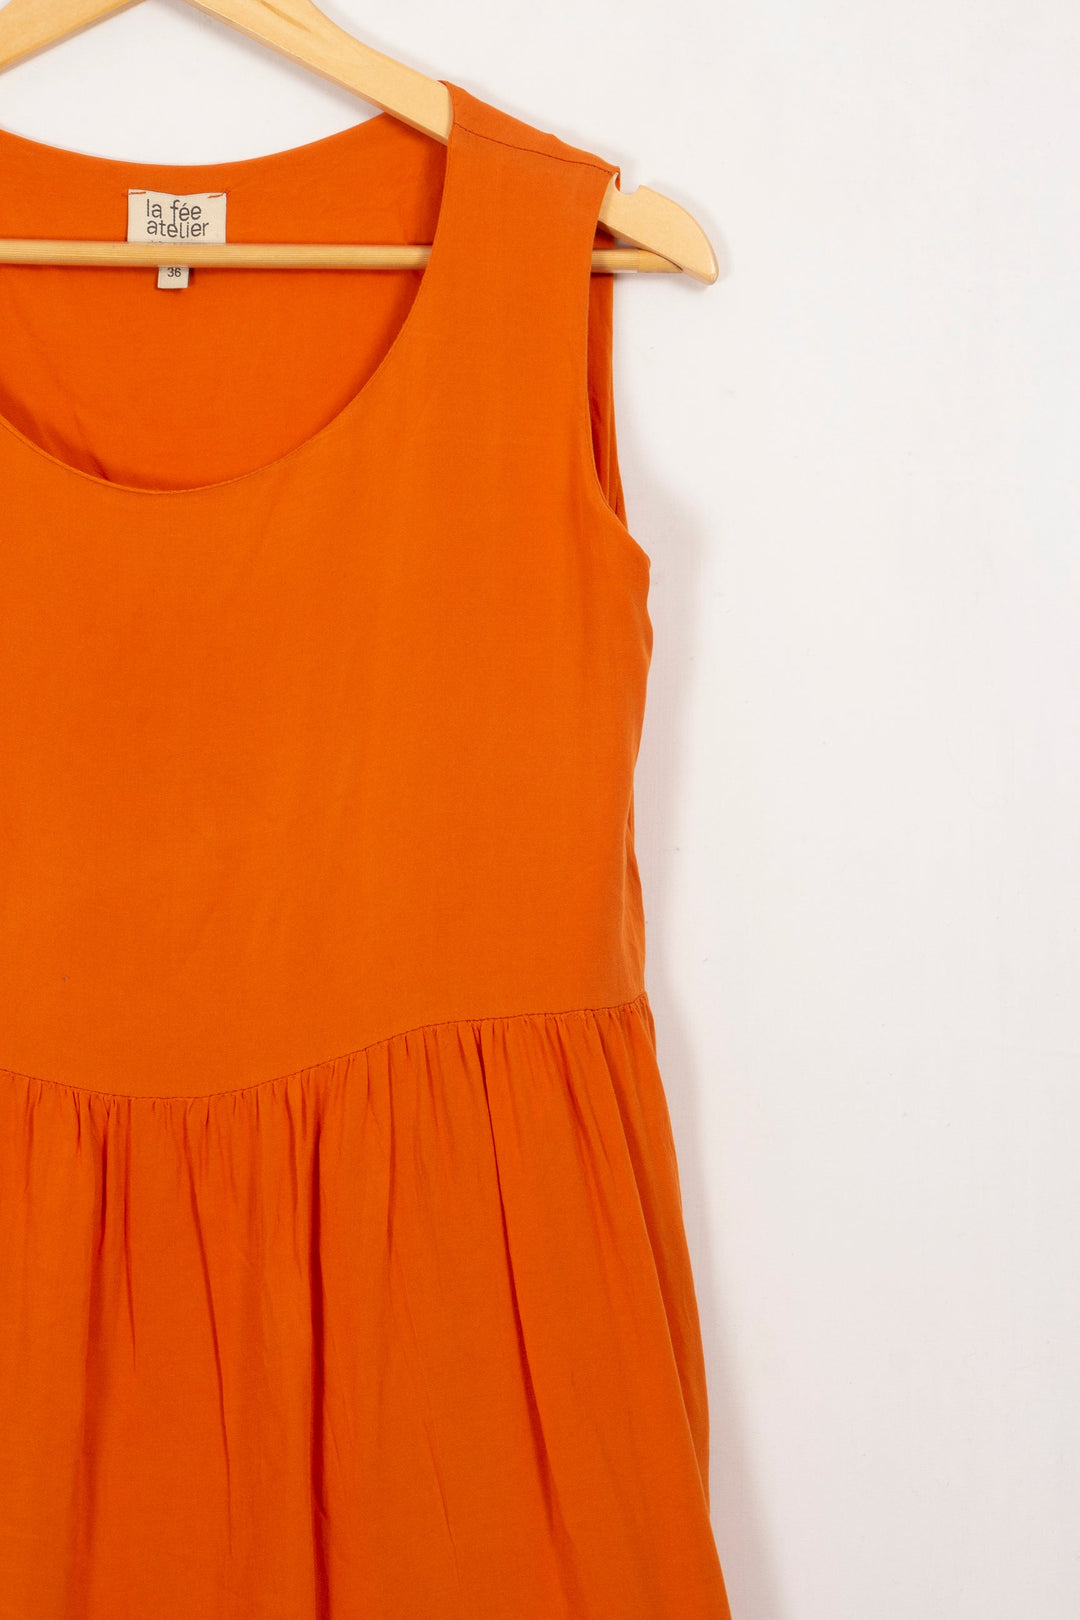 Orangefarbenes Kleid von La Fée Maraboutée – 36